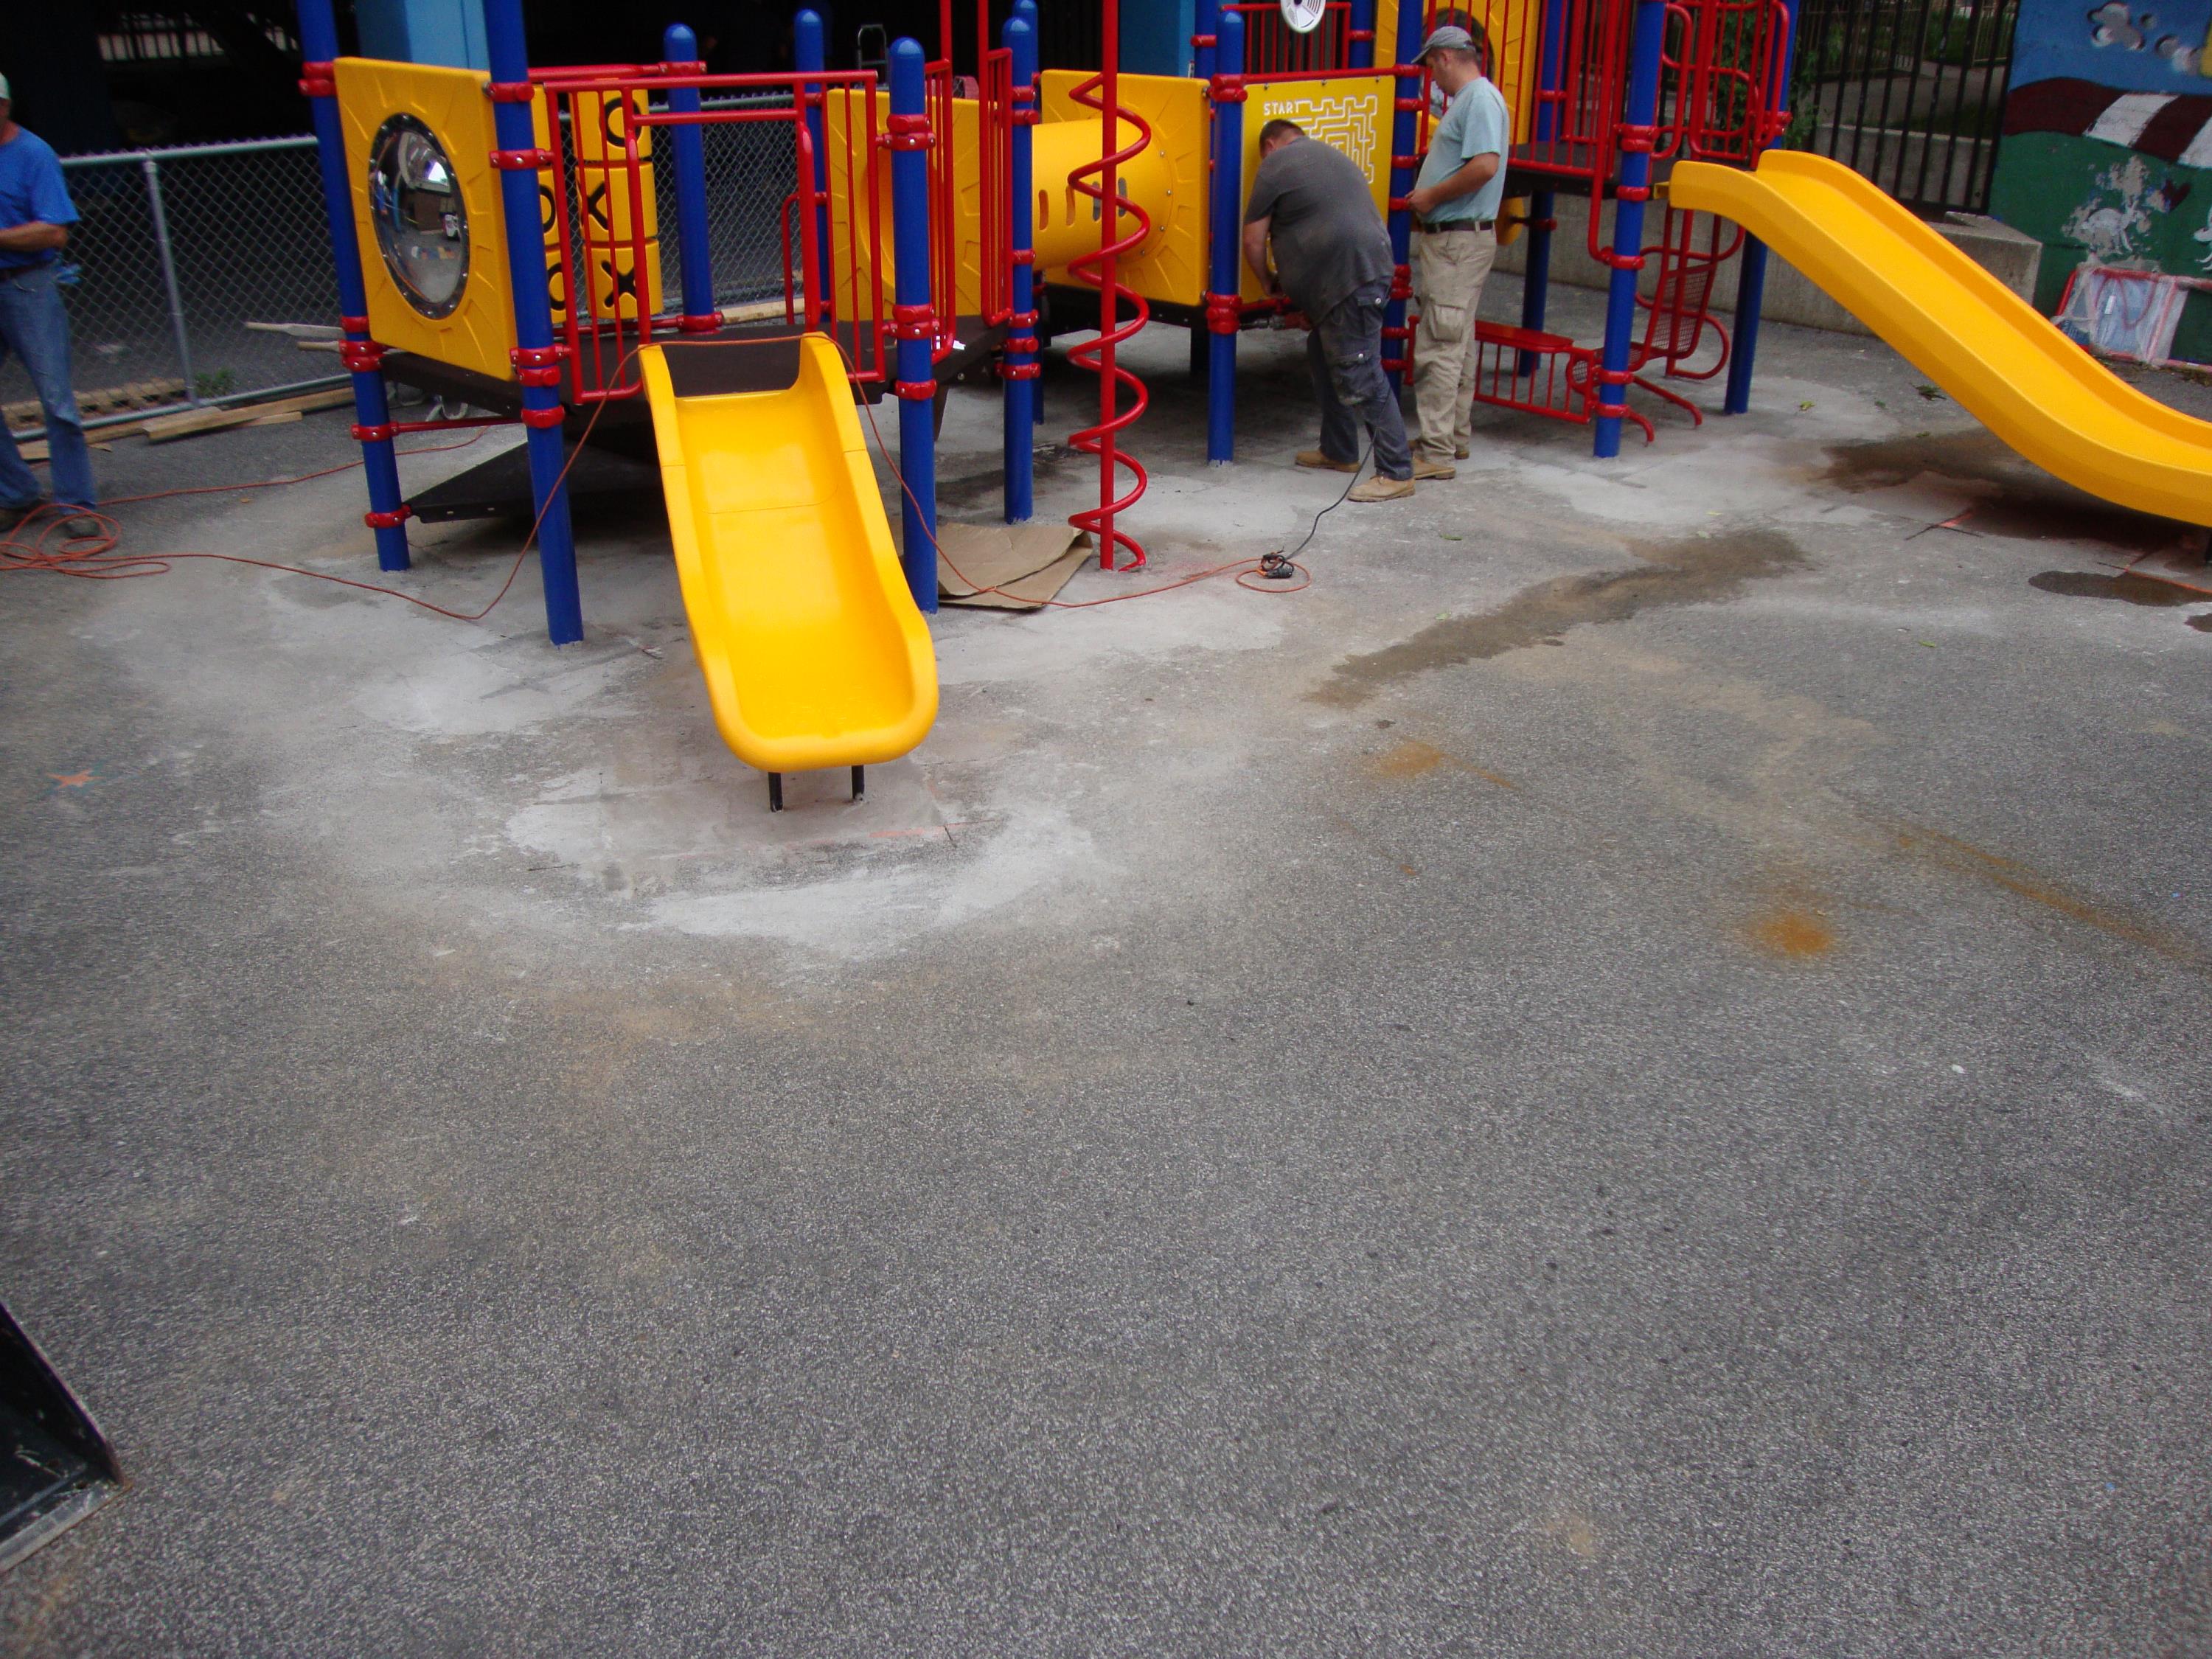 Preschool Playground Tiles - 2 locations m